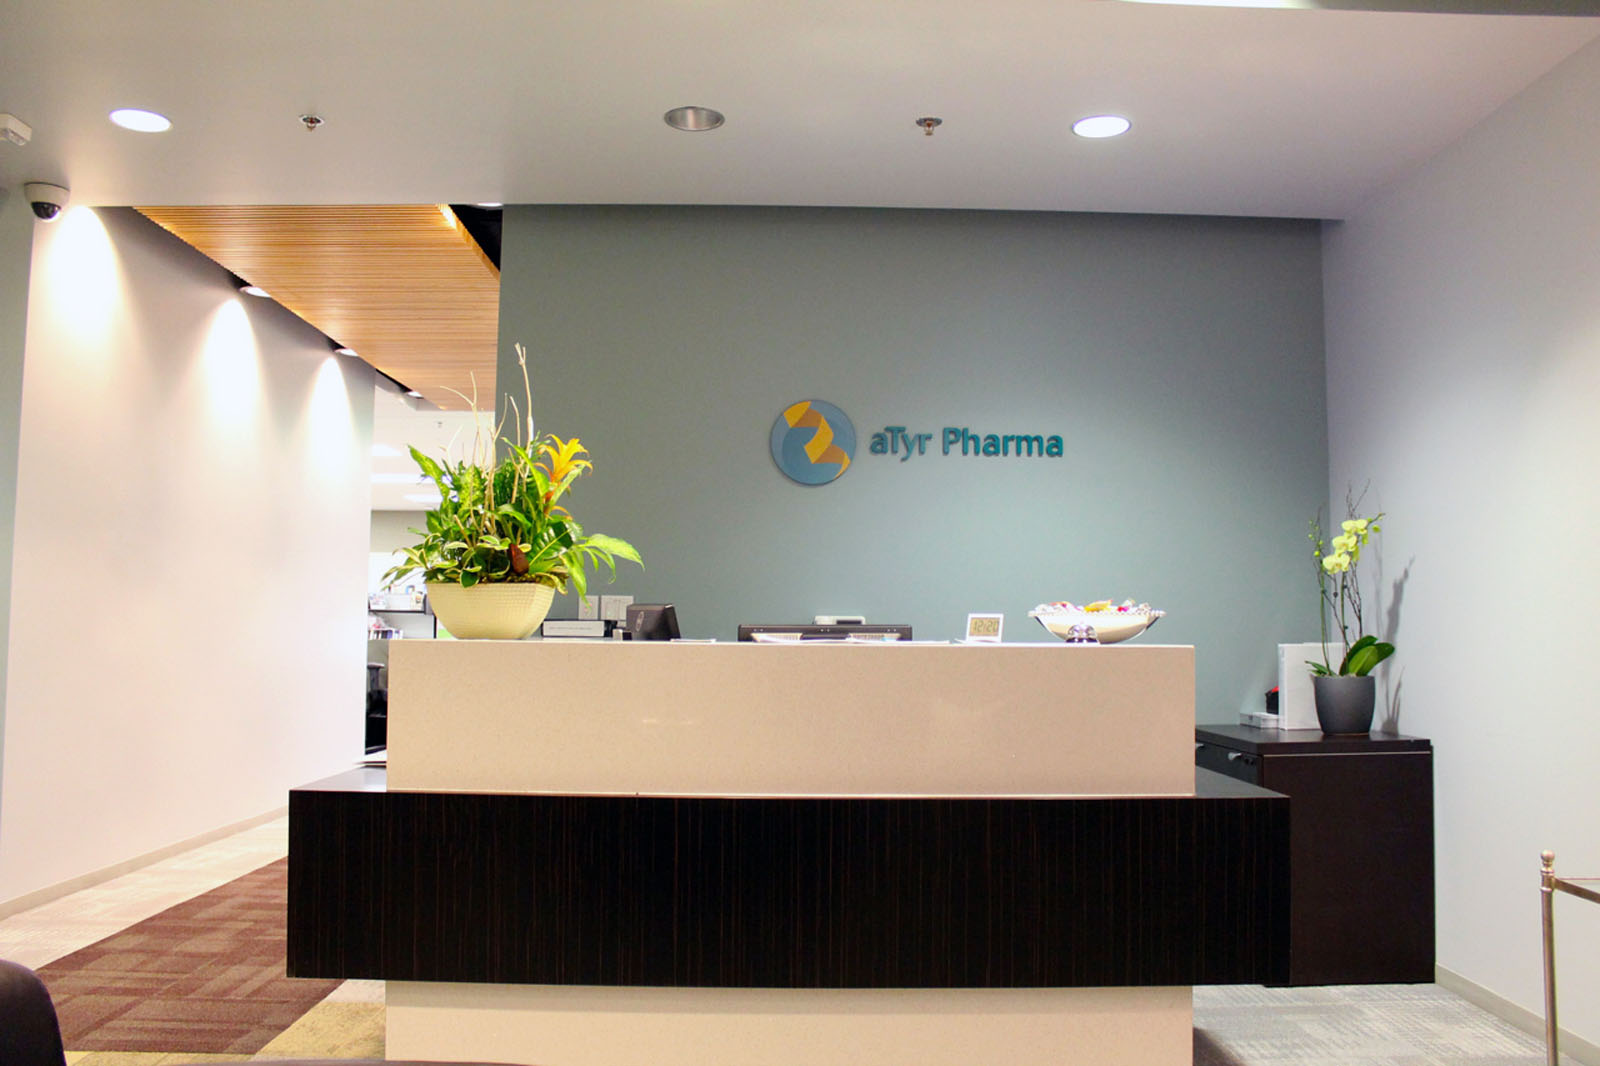 aTyr Pharma reception desk